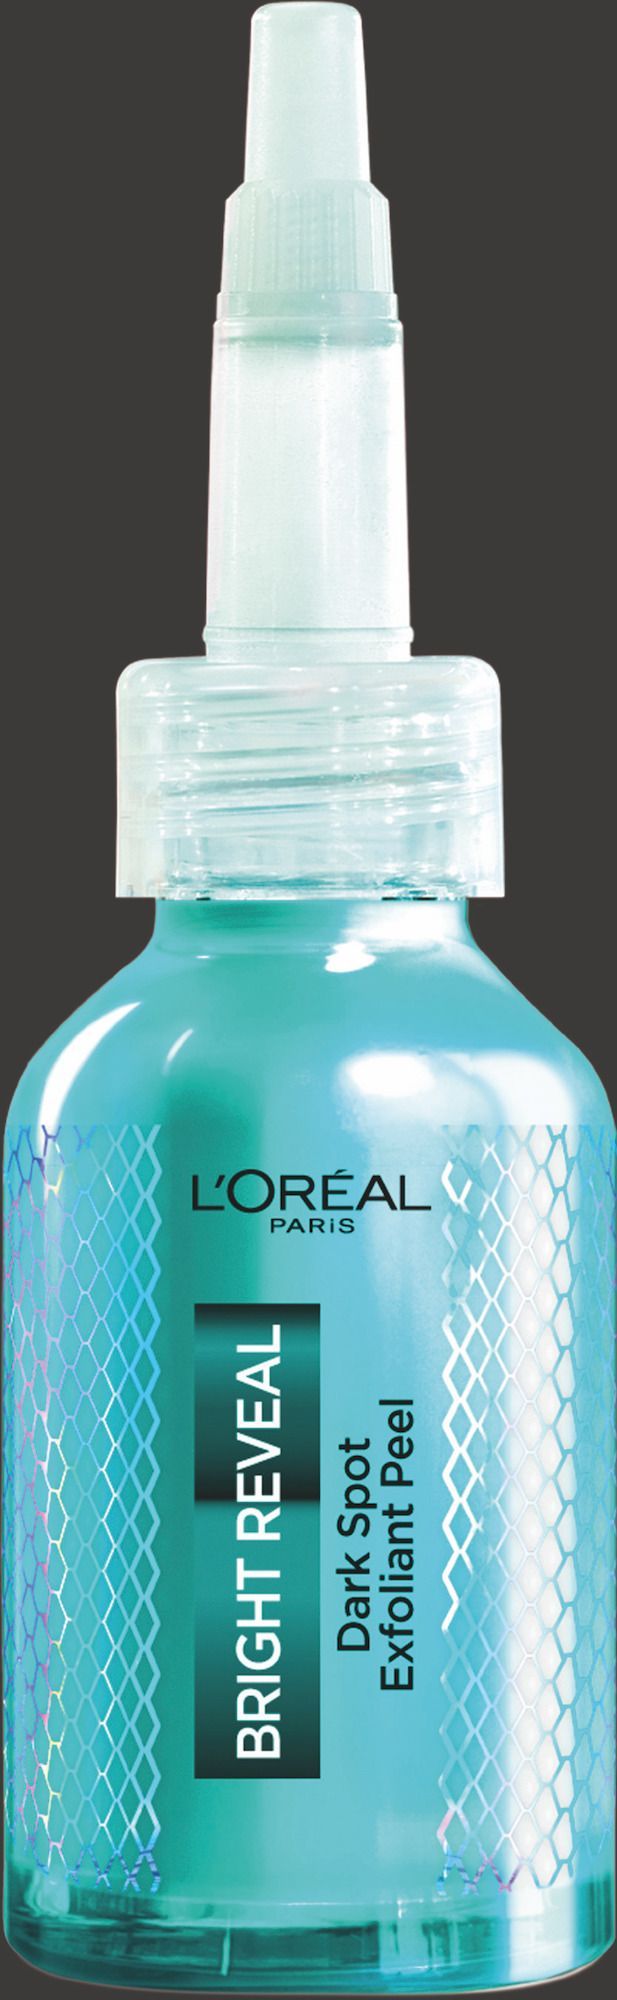 L'Oréal Paris Bright Reveal Dark Spot Exfoliant Peel